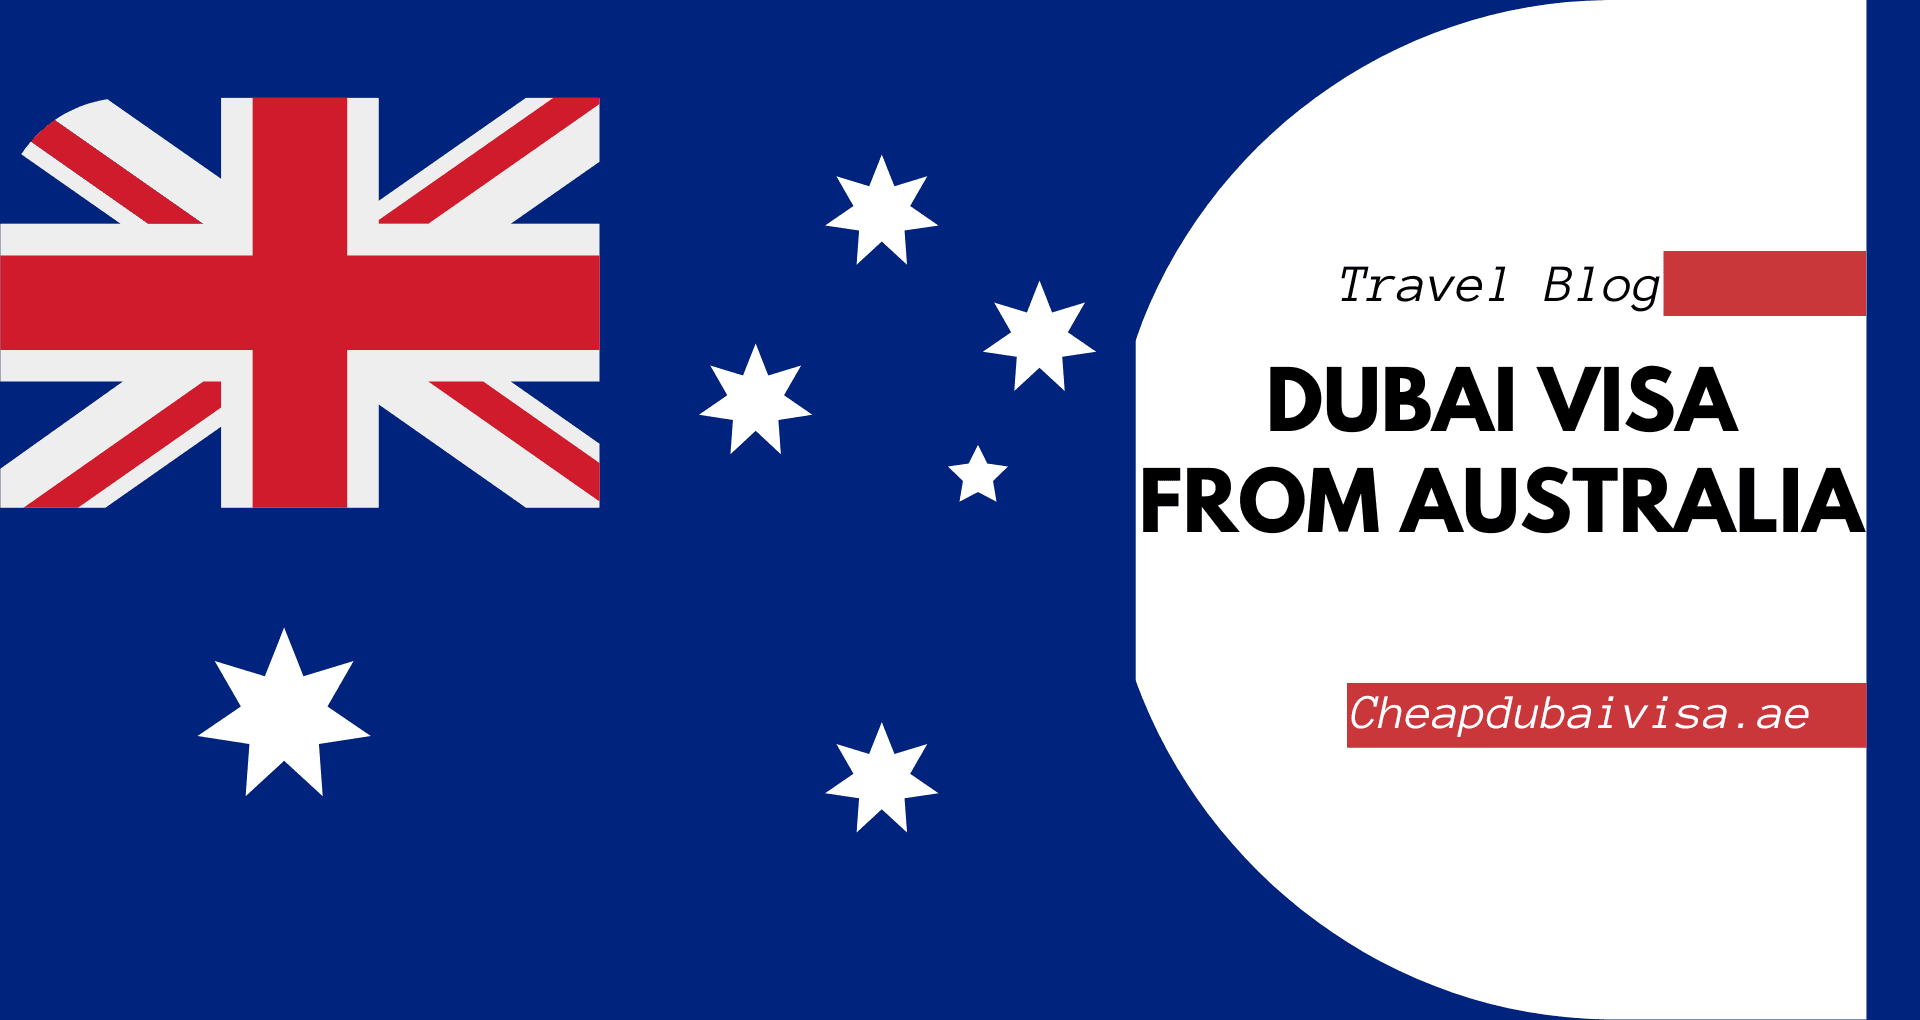 Dubai Visa From Australia